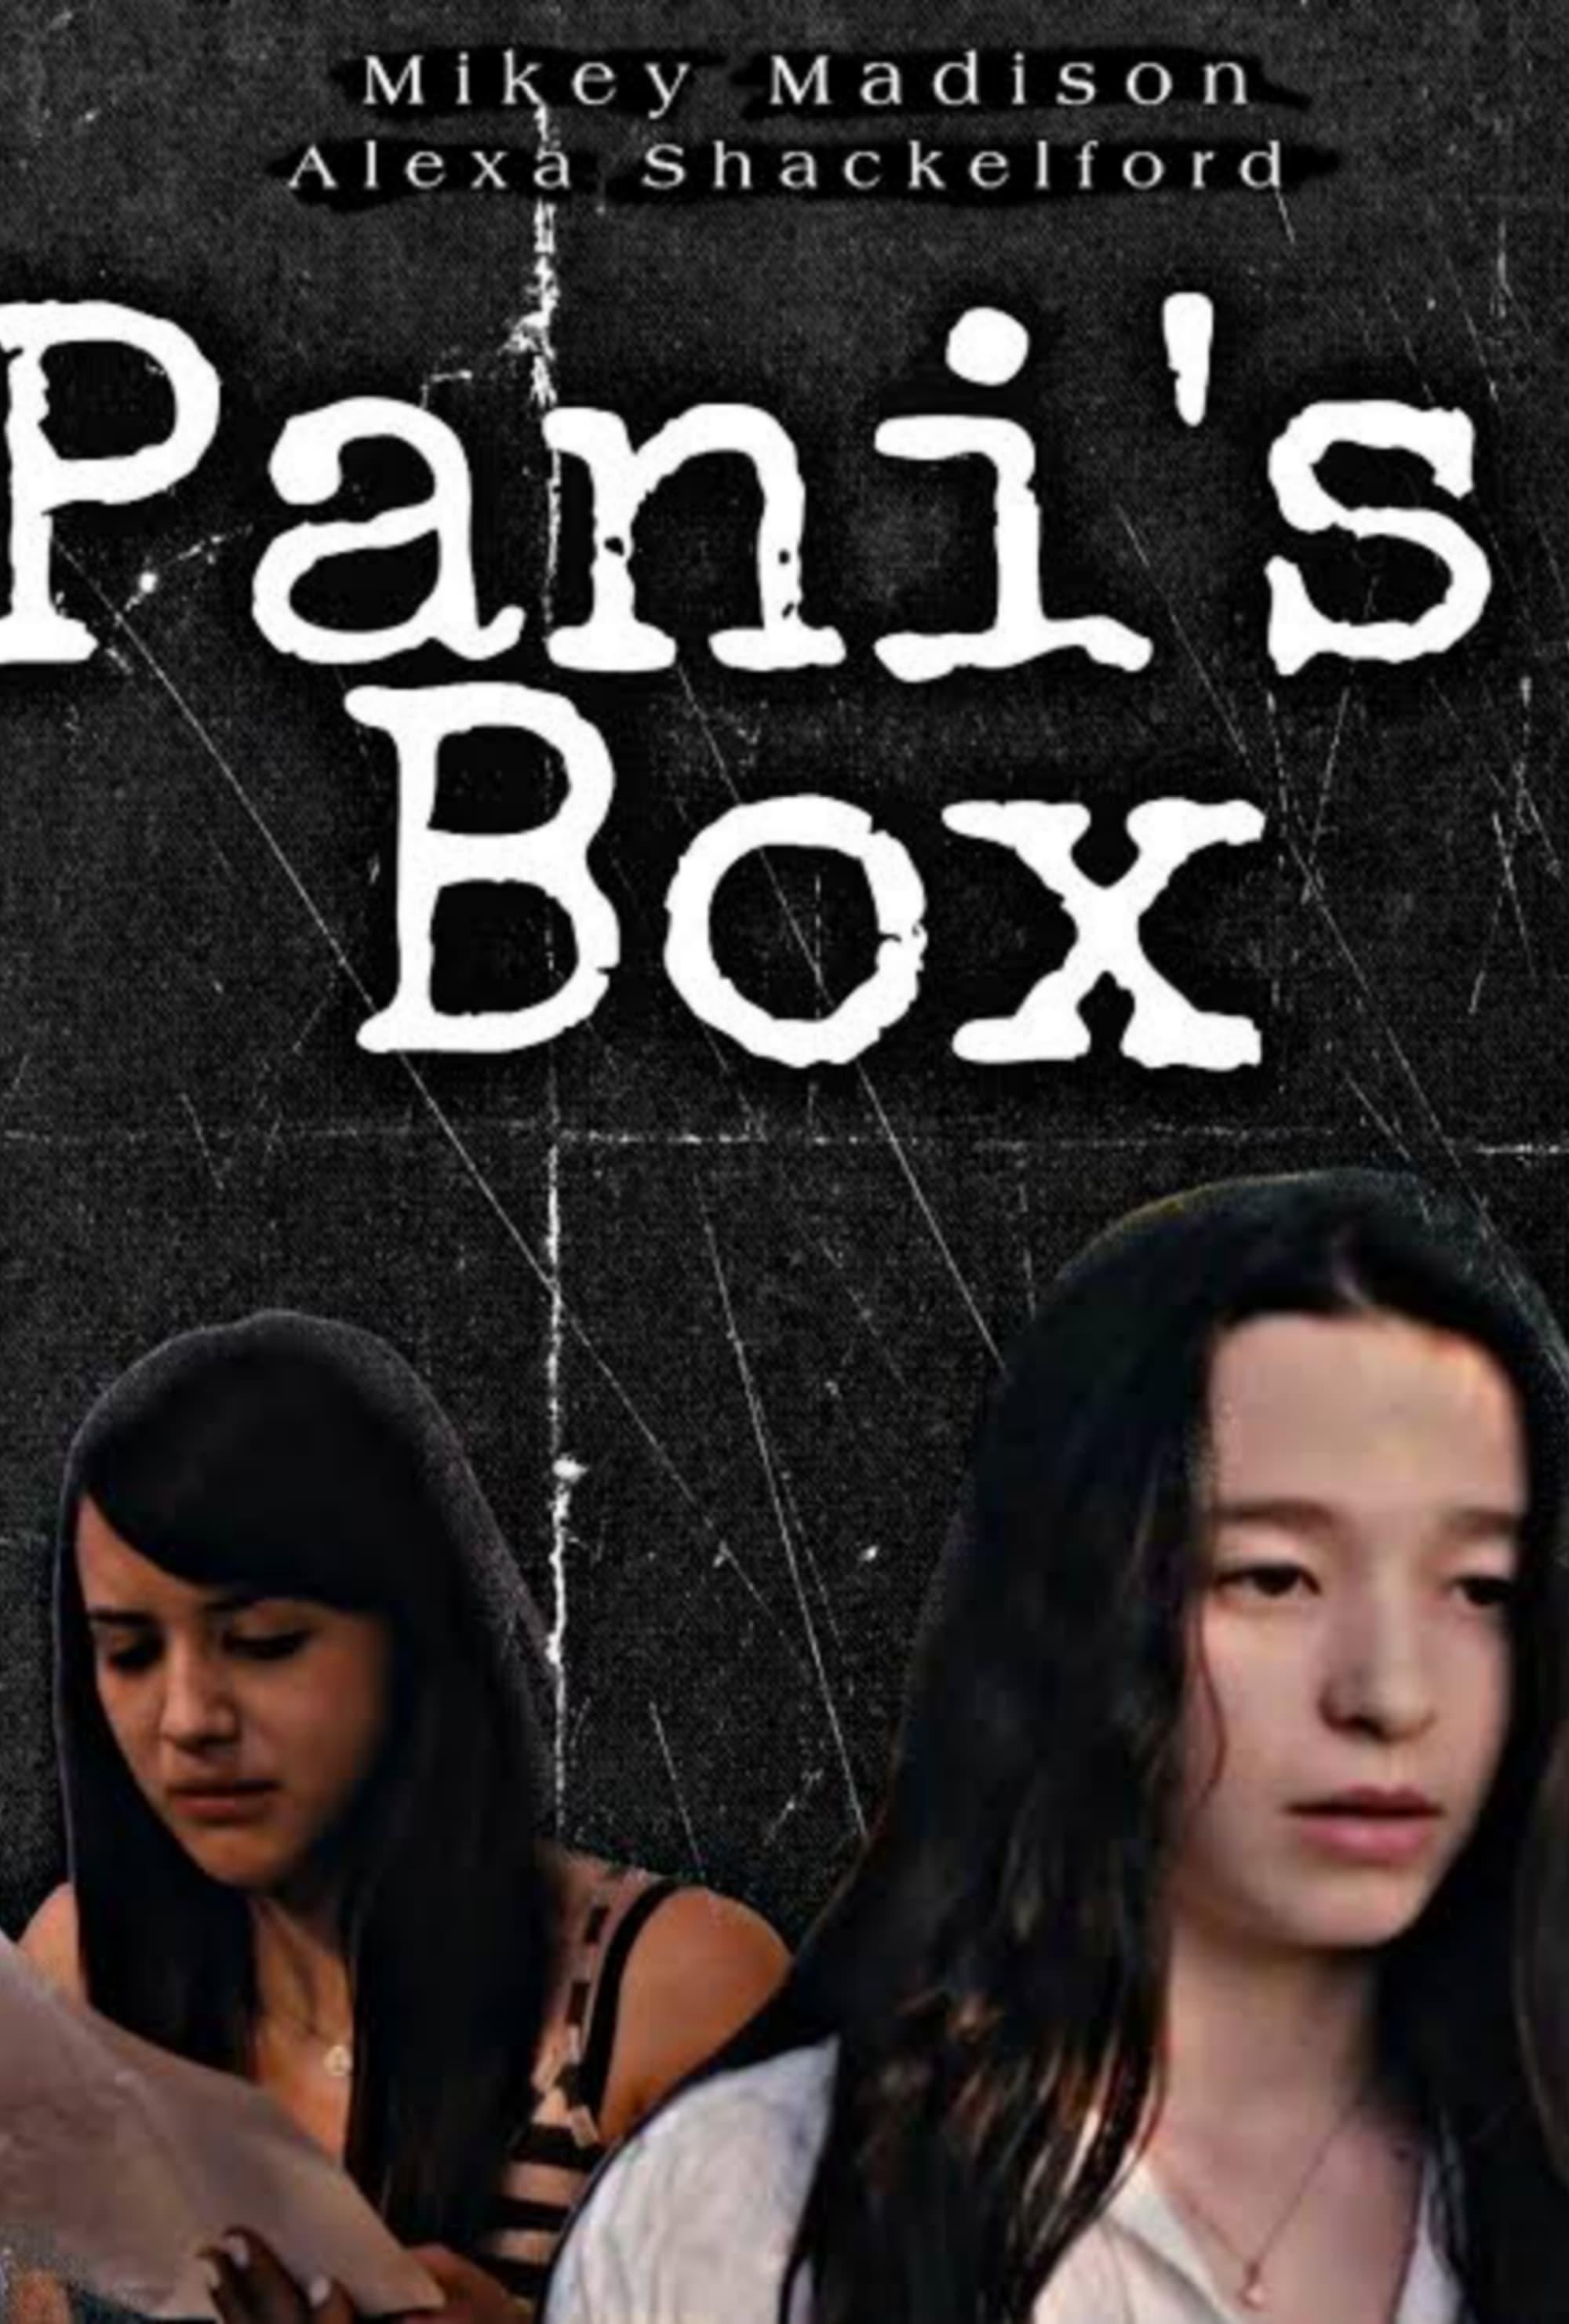 Pani's Box poster